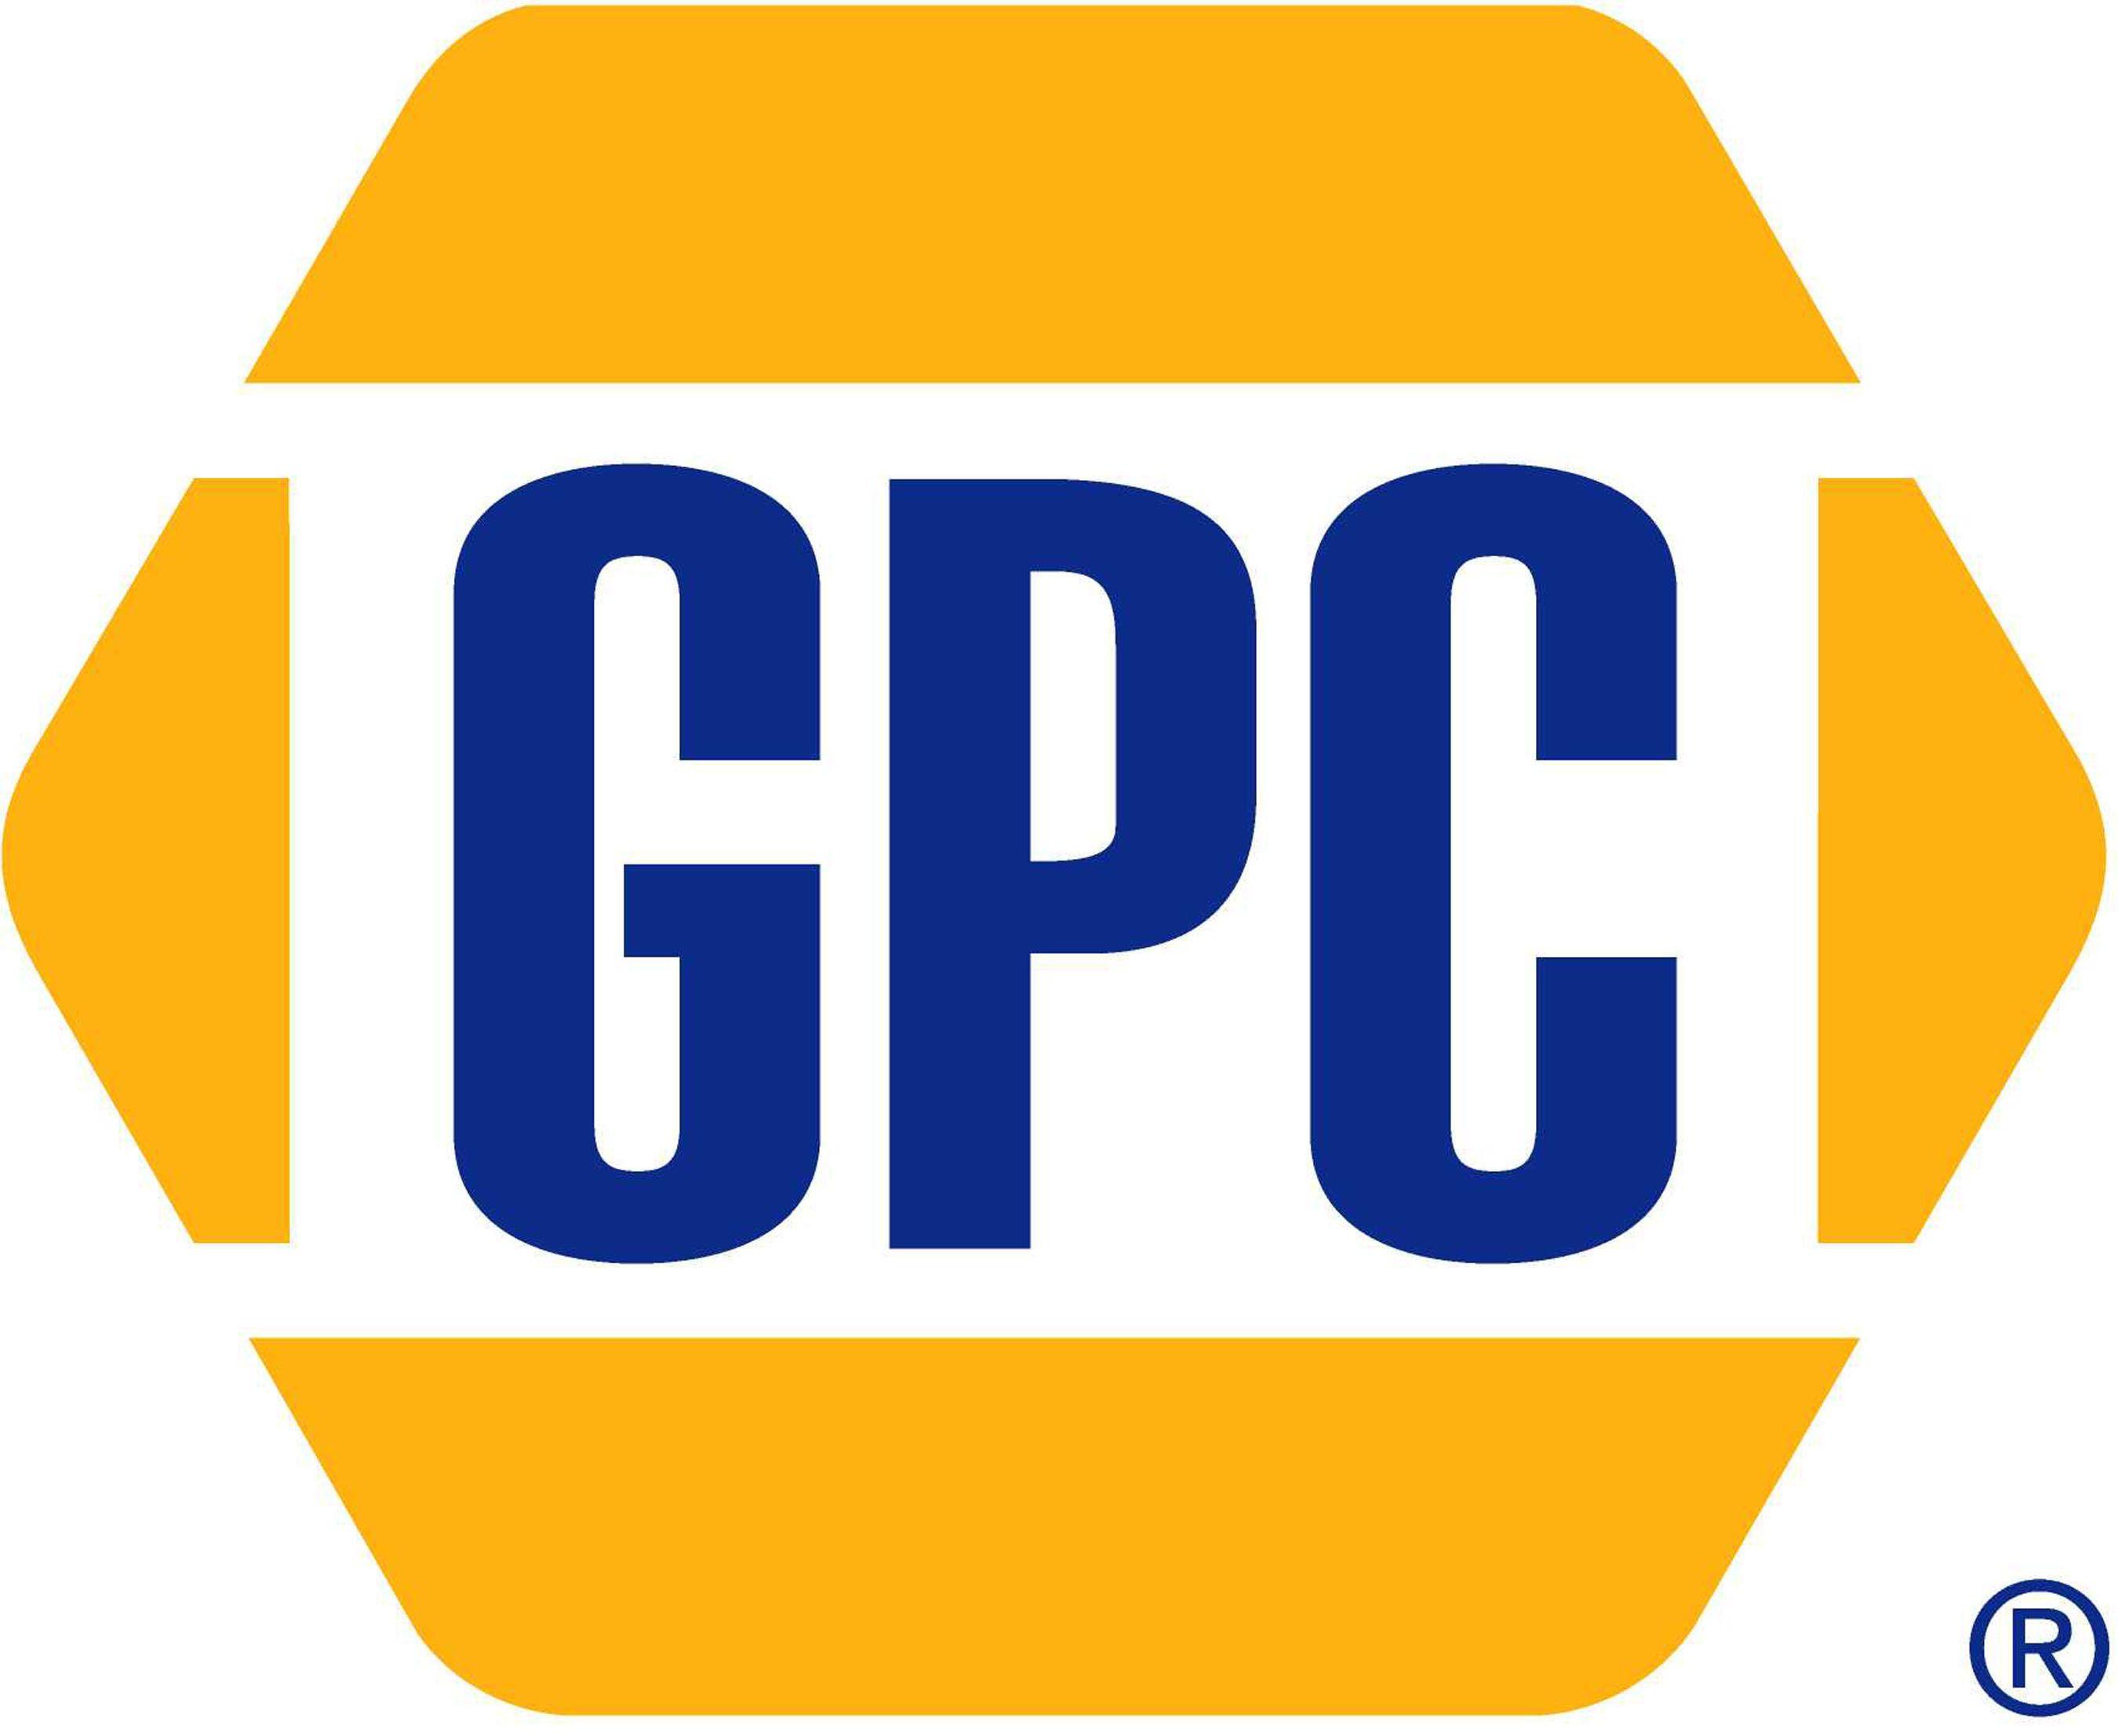 Automotive Parts Manufacturer Logo - Genuine Parts Company Completes Automotive And Industrial Acquisitions